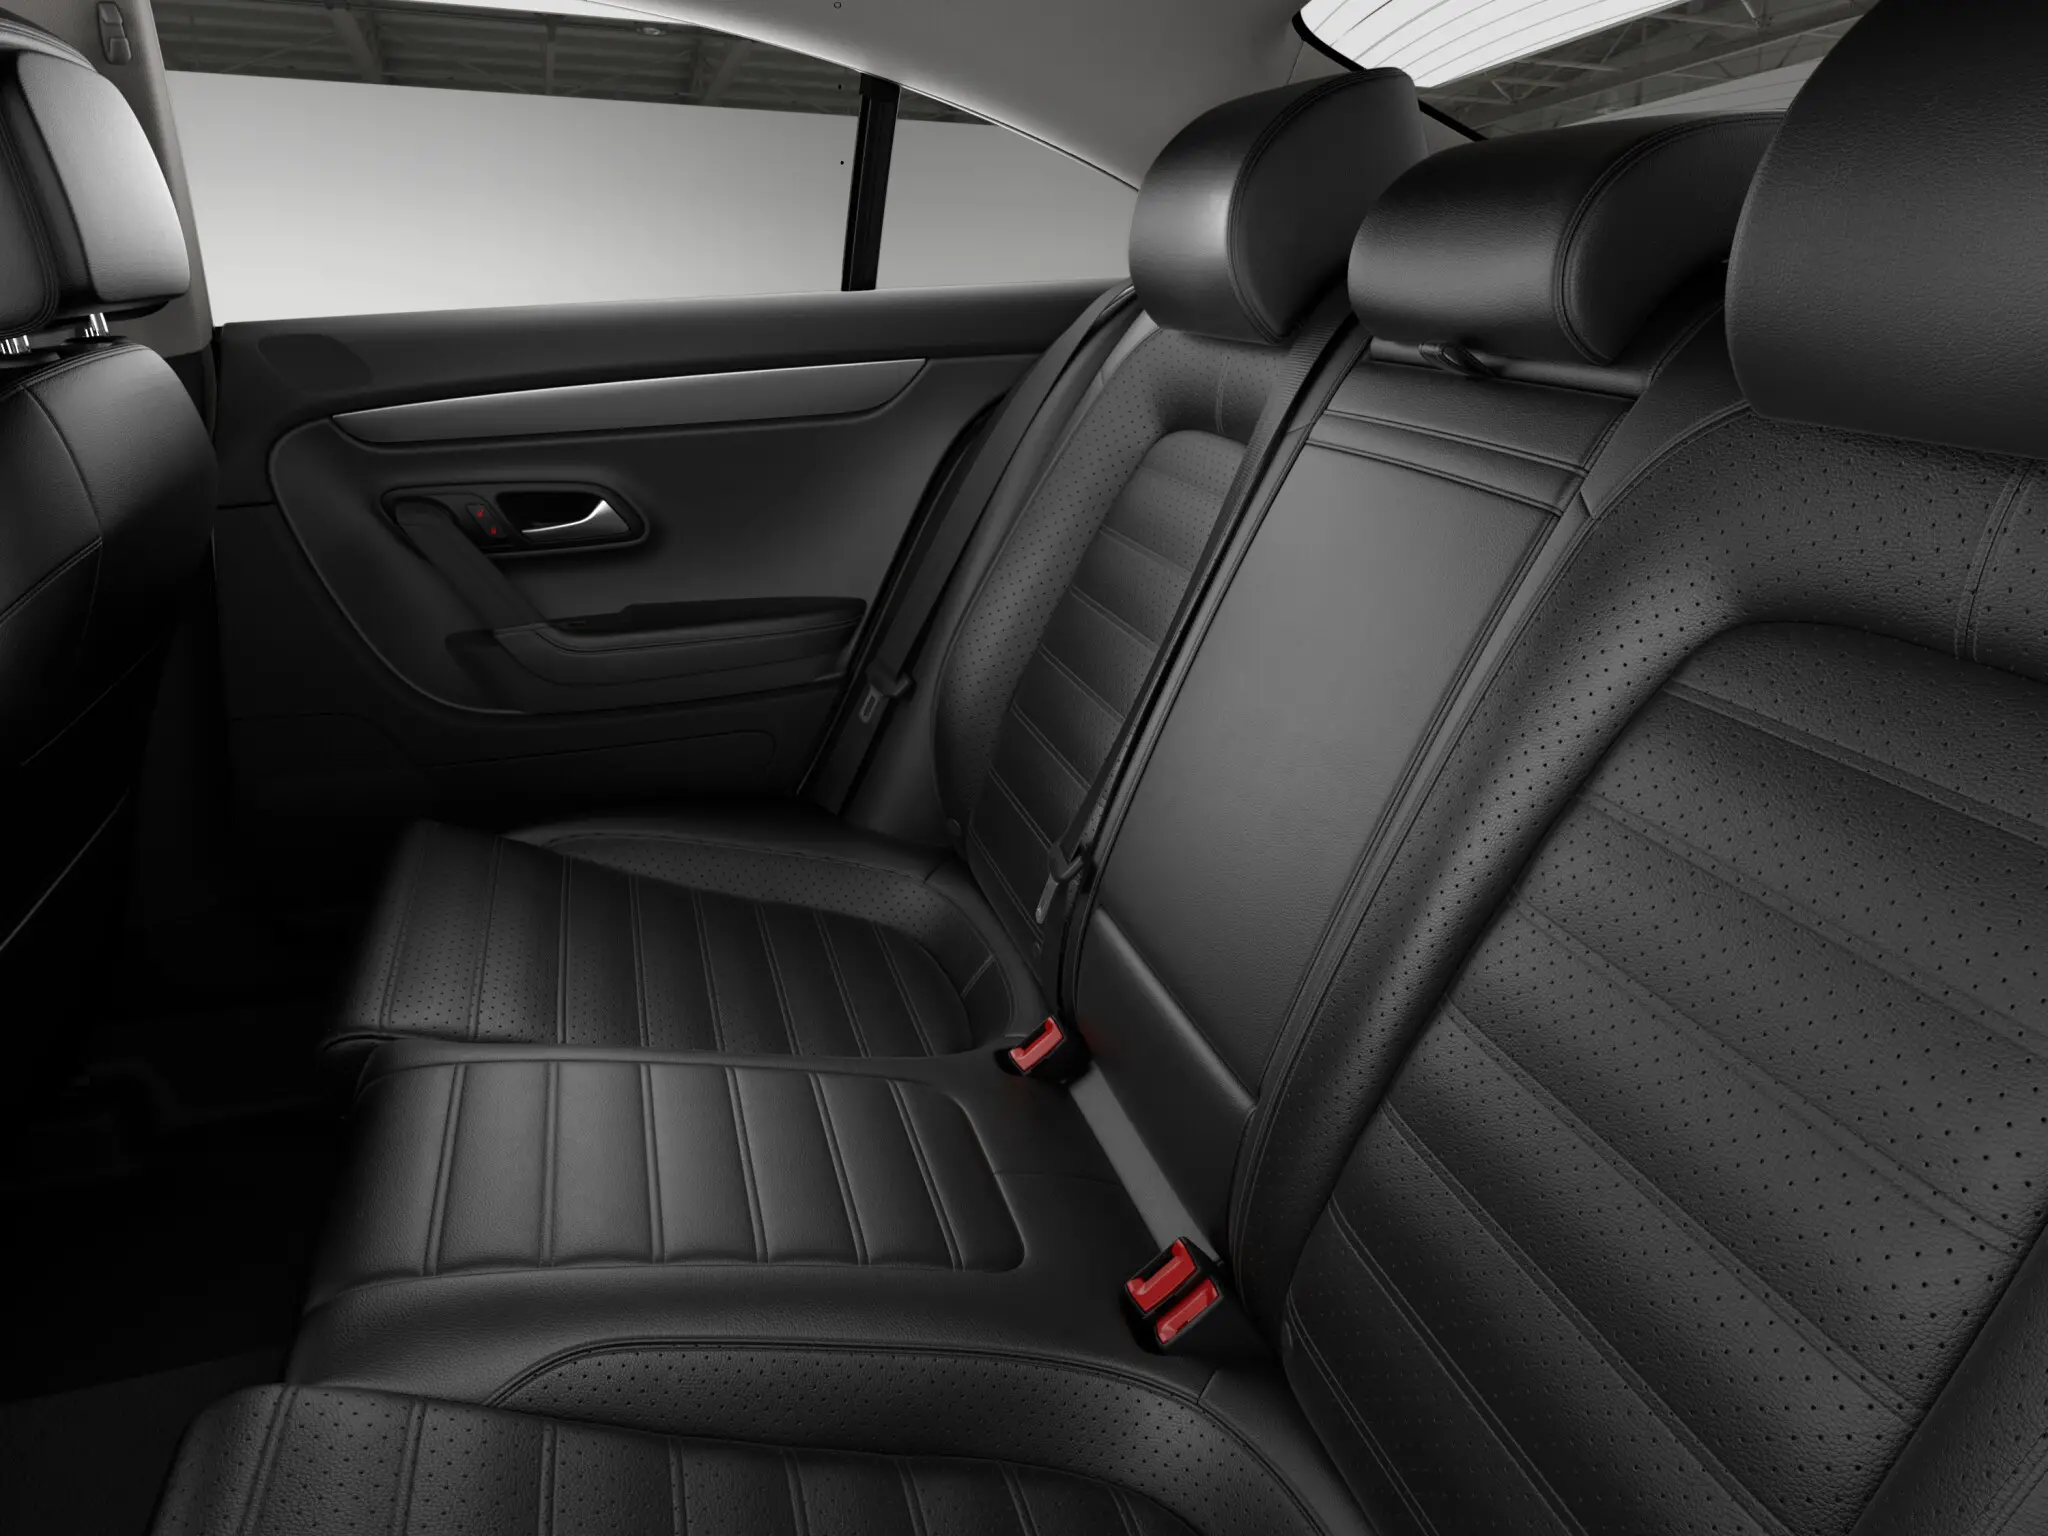 Volkswagen CC R Line interior rear seat view